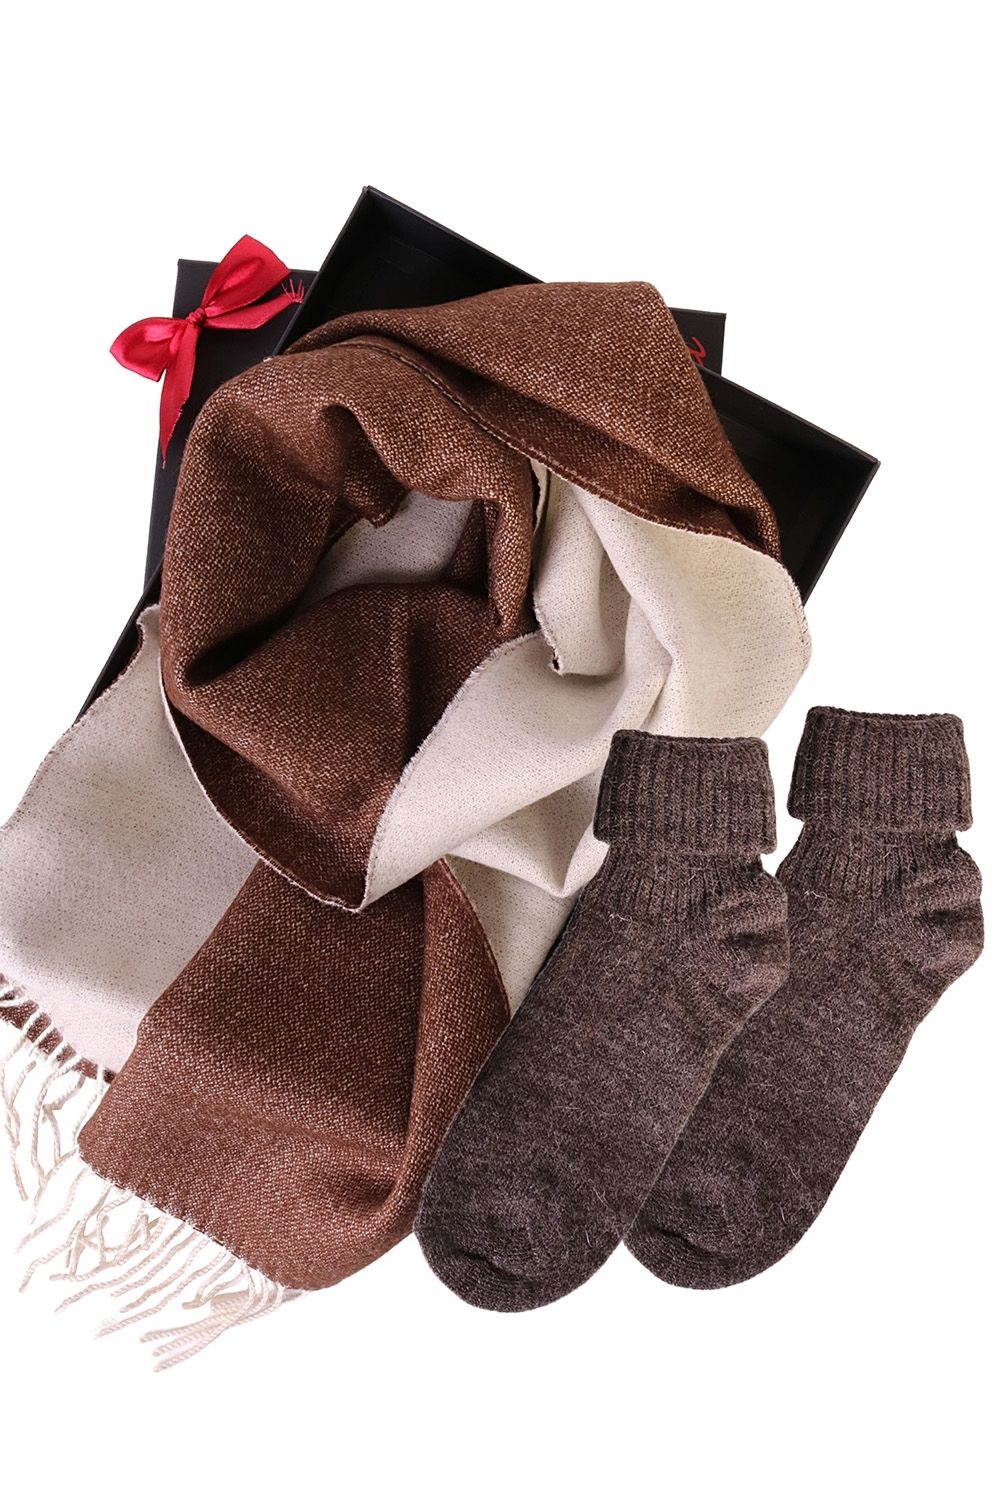 Alpaca wool two sided scarf and alpaca wool socks gift box for women